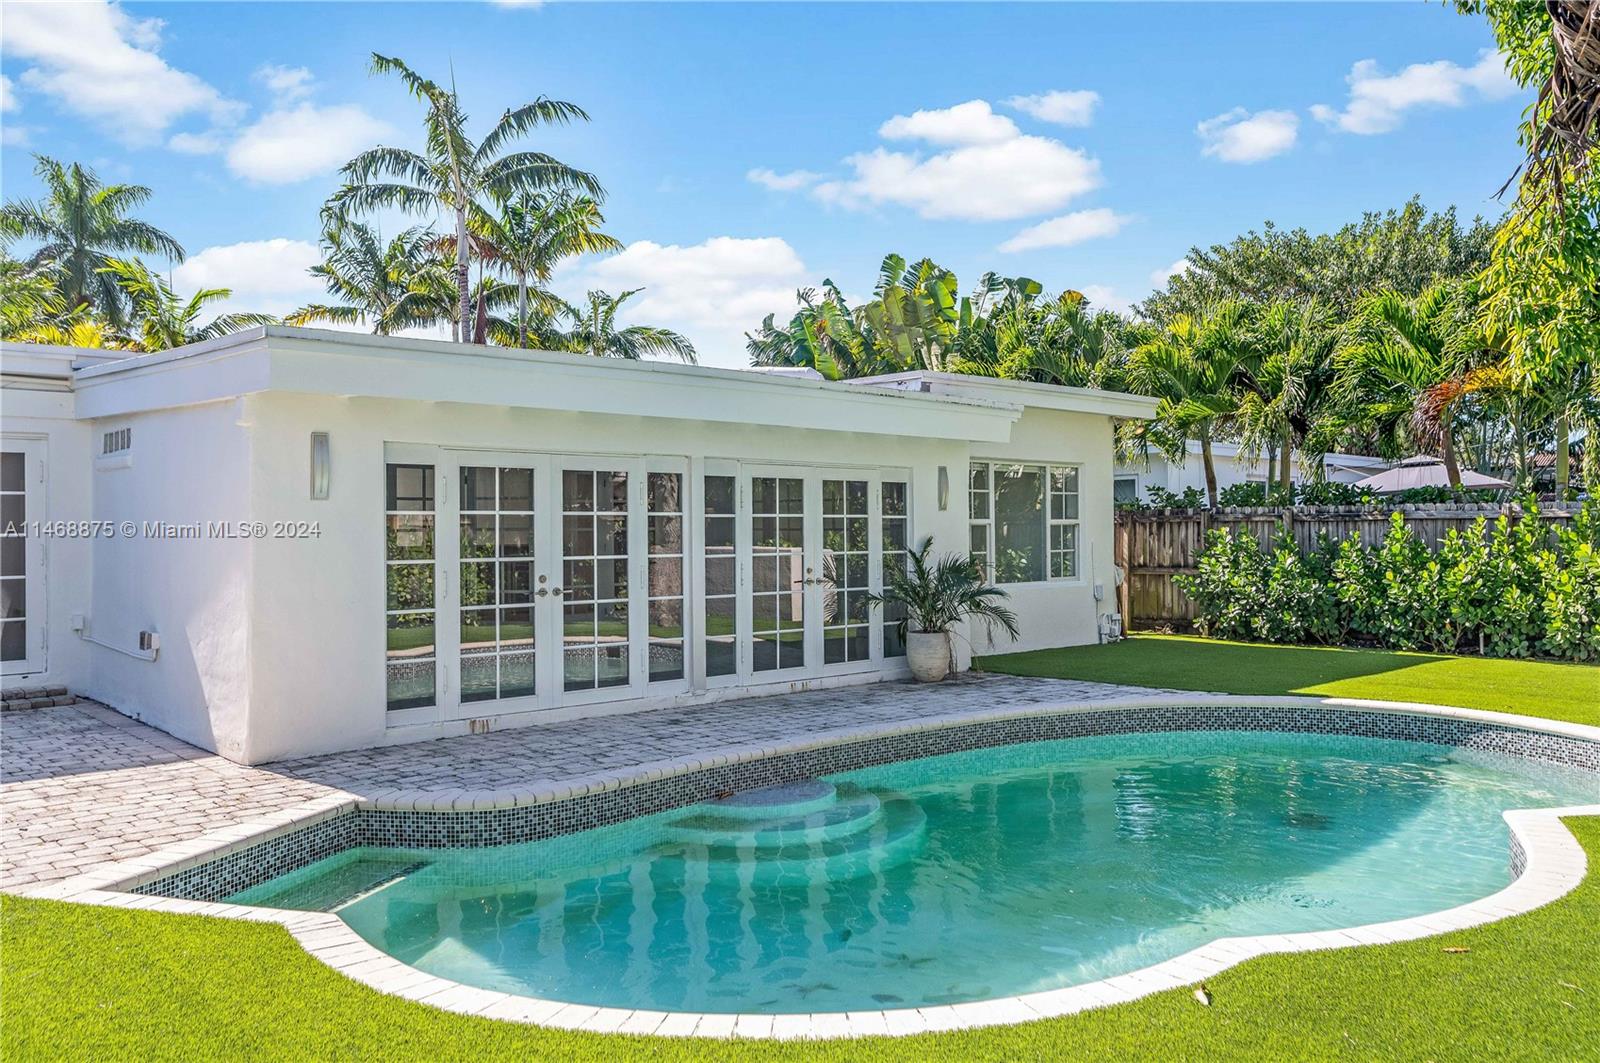 Property for Sale at 345 Fairway Dr, Miami Beach, Miami-Dade County, Florida - Bedrooms: 4 
Bathrooms: 3  - $1,875,000